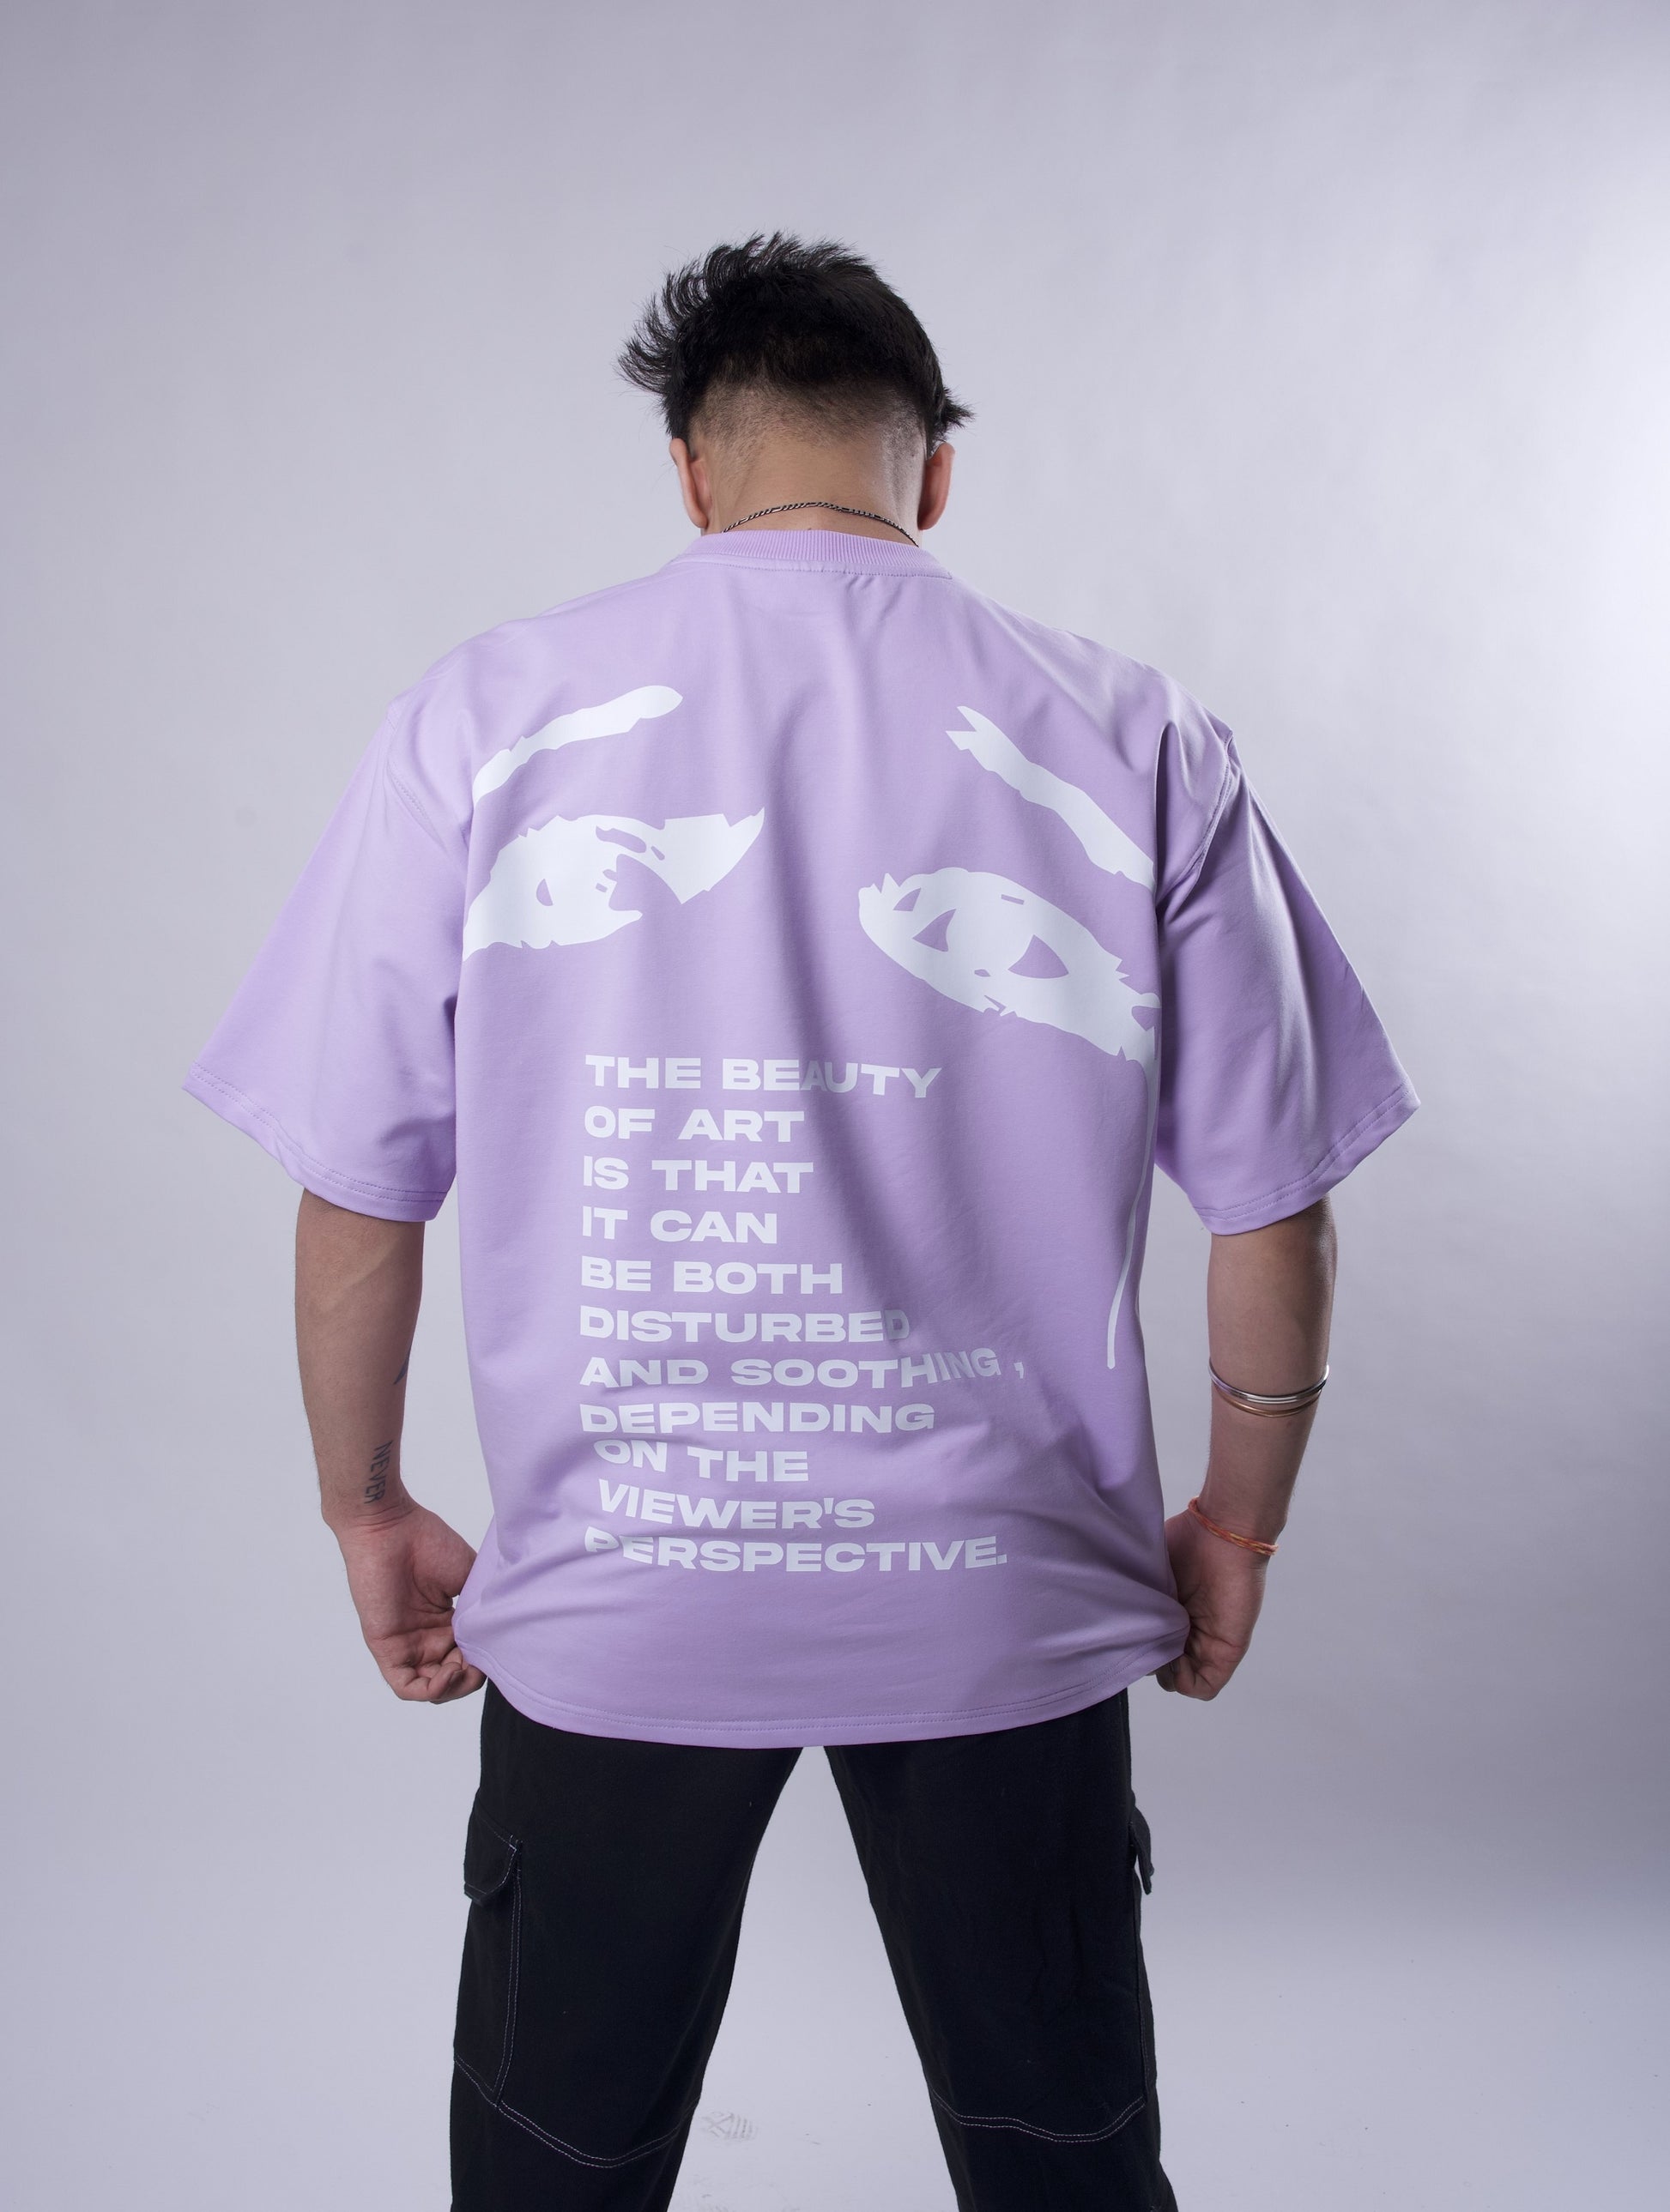 Beauty of Art Over-Sized T-Shirt (Lilac) - Wearduds